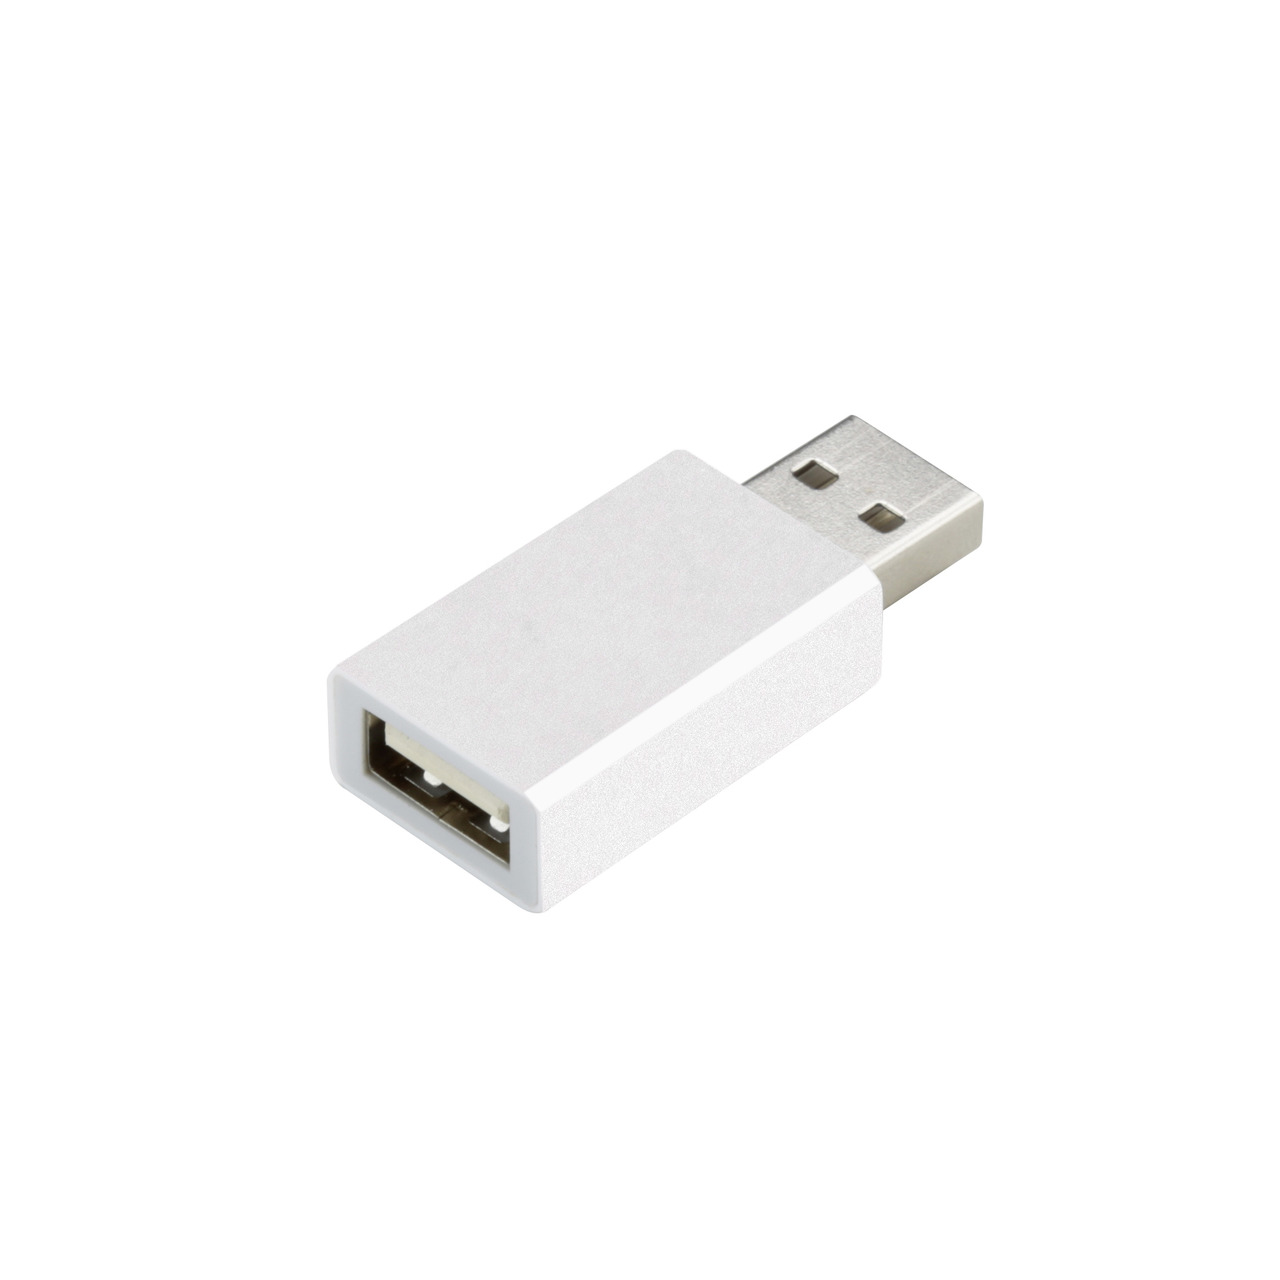 ZOGI USB-Datenblocker RXD-108A- Daten-Sync-Blocker für Smartphones und Tablets - Anti-Juice-Hacking unter PC-Hardware